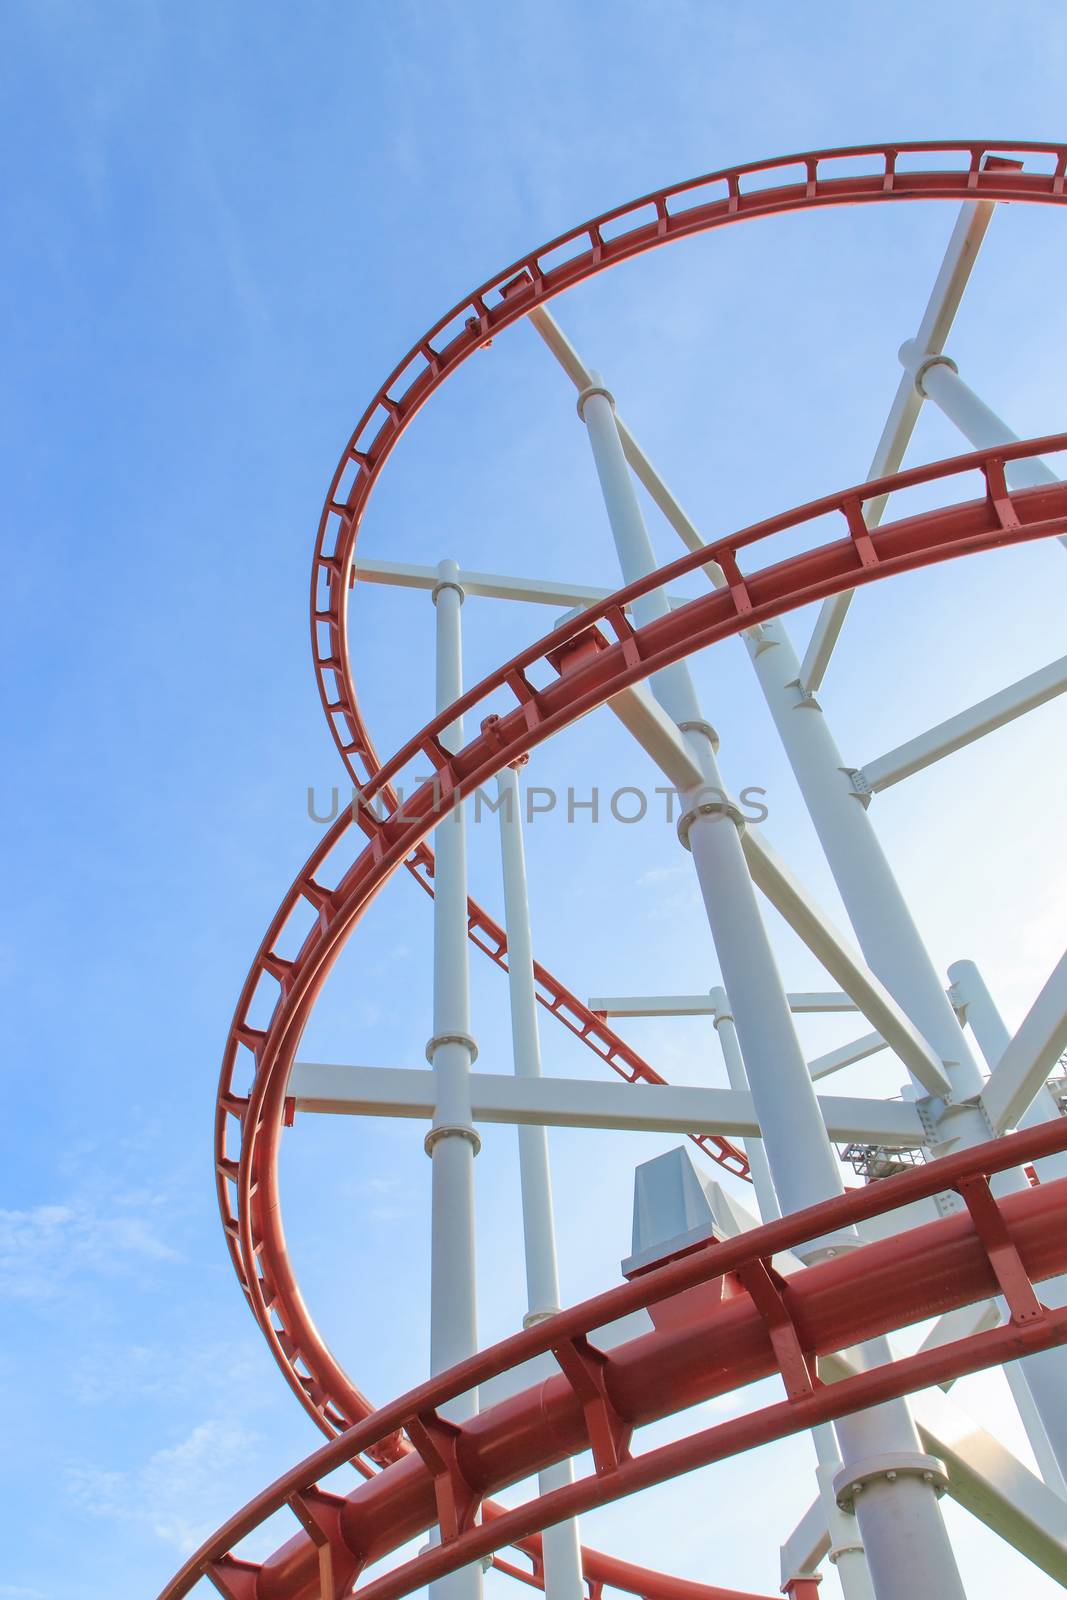 loops of rollercoaster by blackzheep